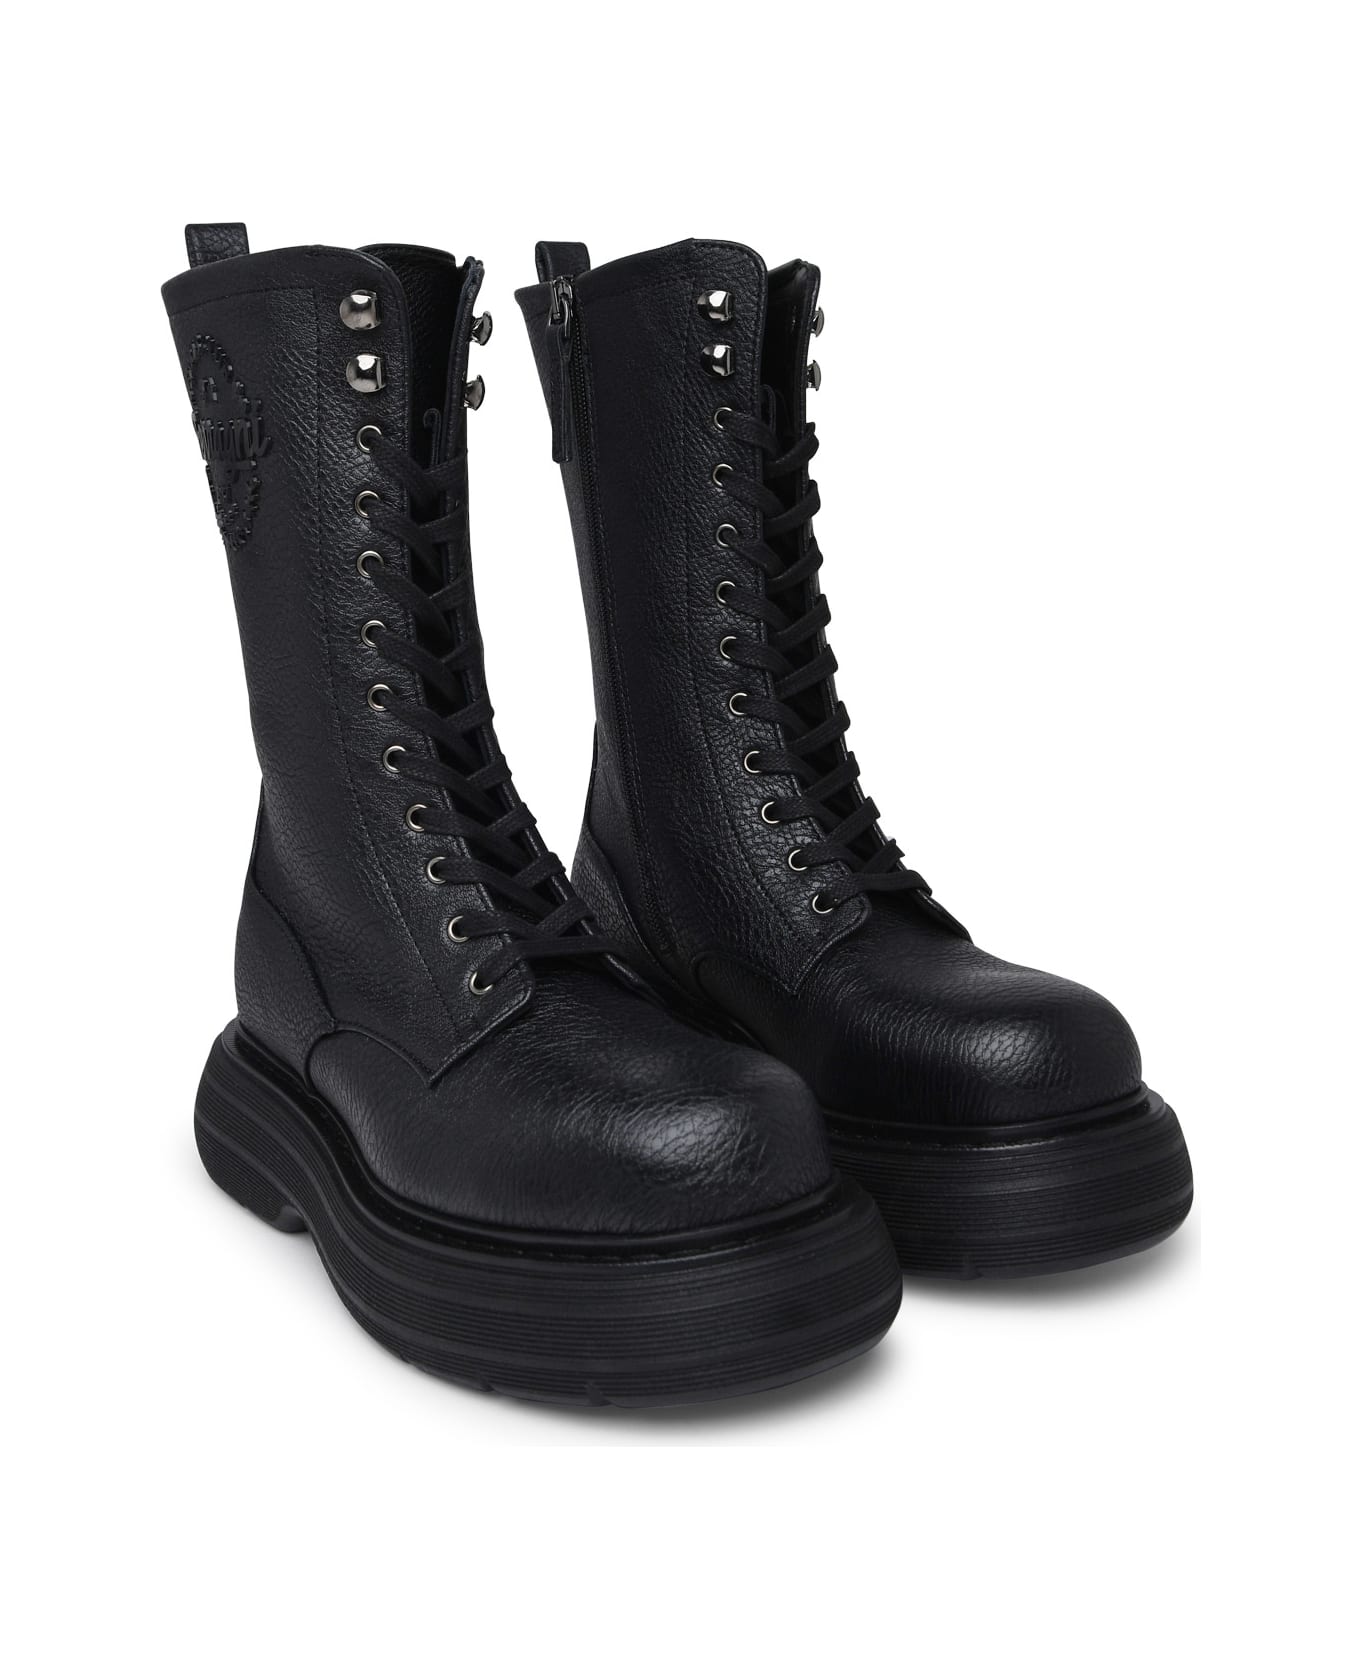 Chiara Ferragni 'ghirls' Black Hammered Leather Amphibious Boots - Black ブーツ